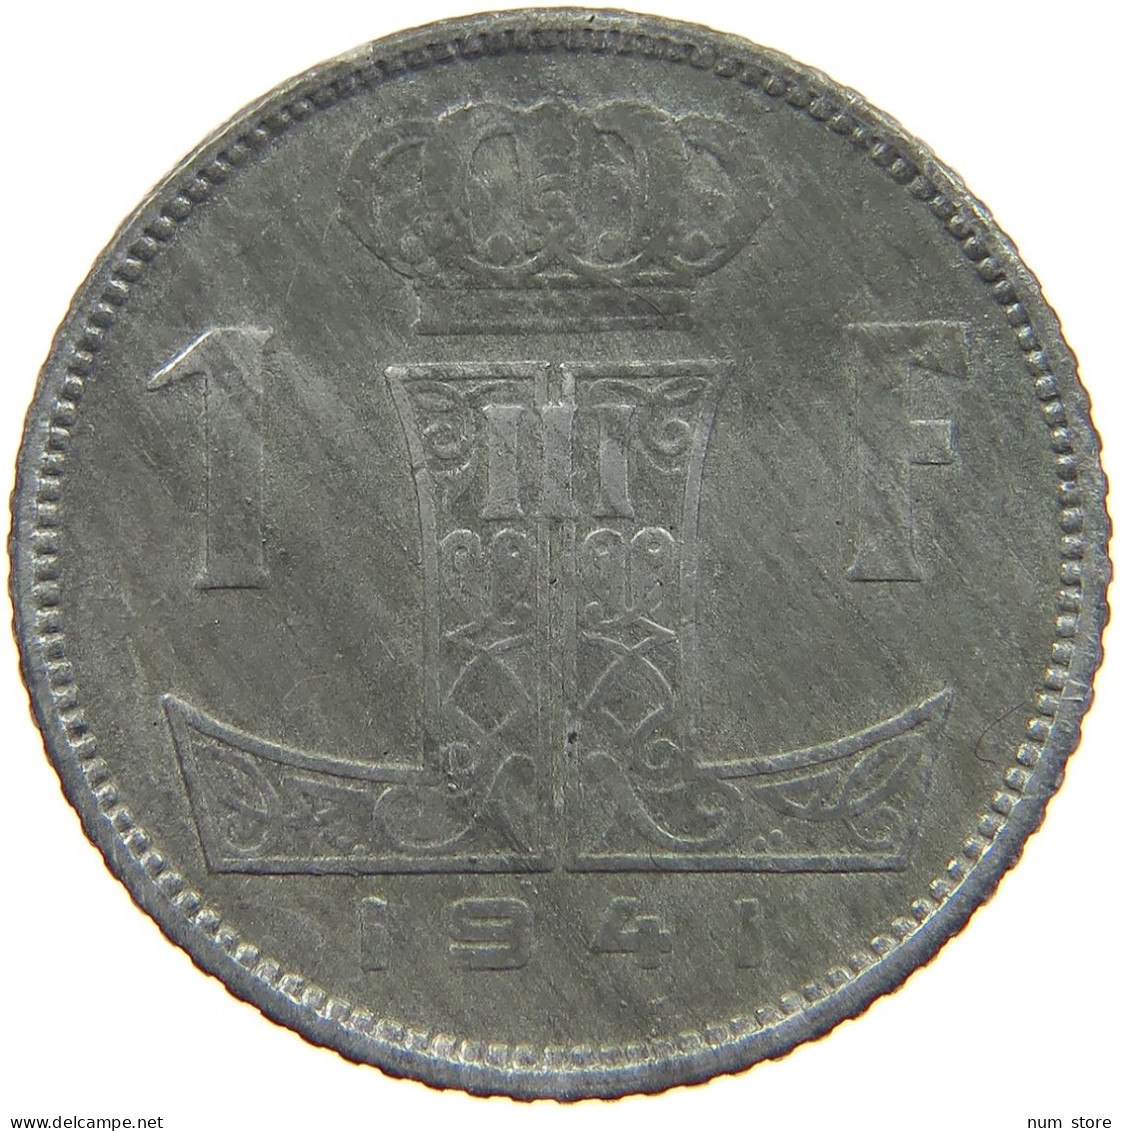 BELGIUM 1 FRANC 1941 #c020 0441 - 1 Franc